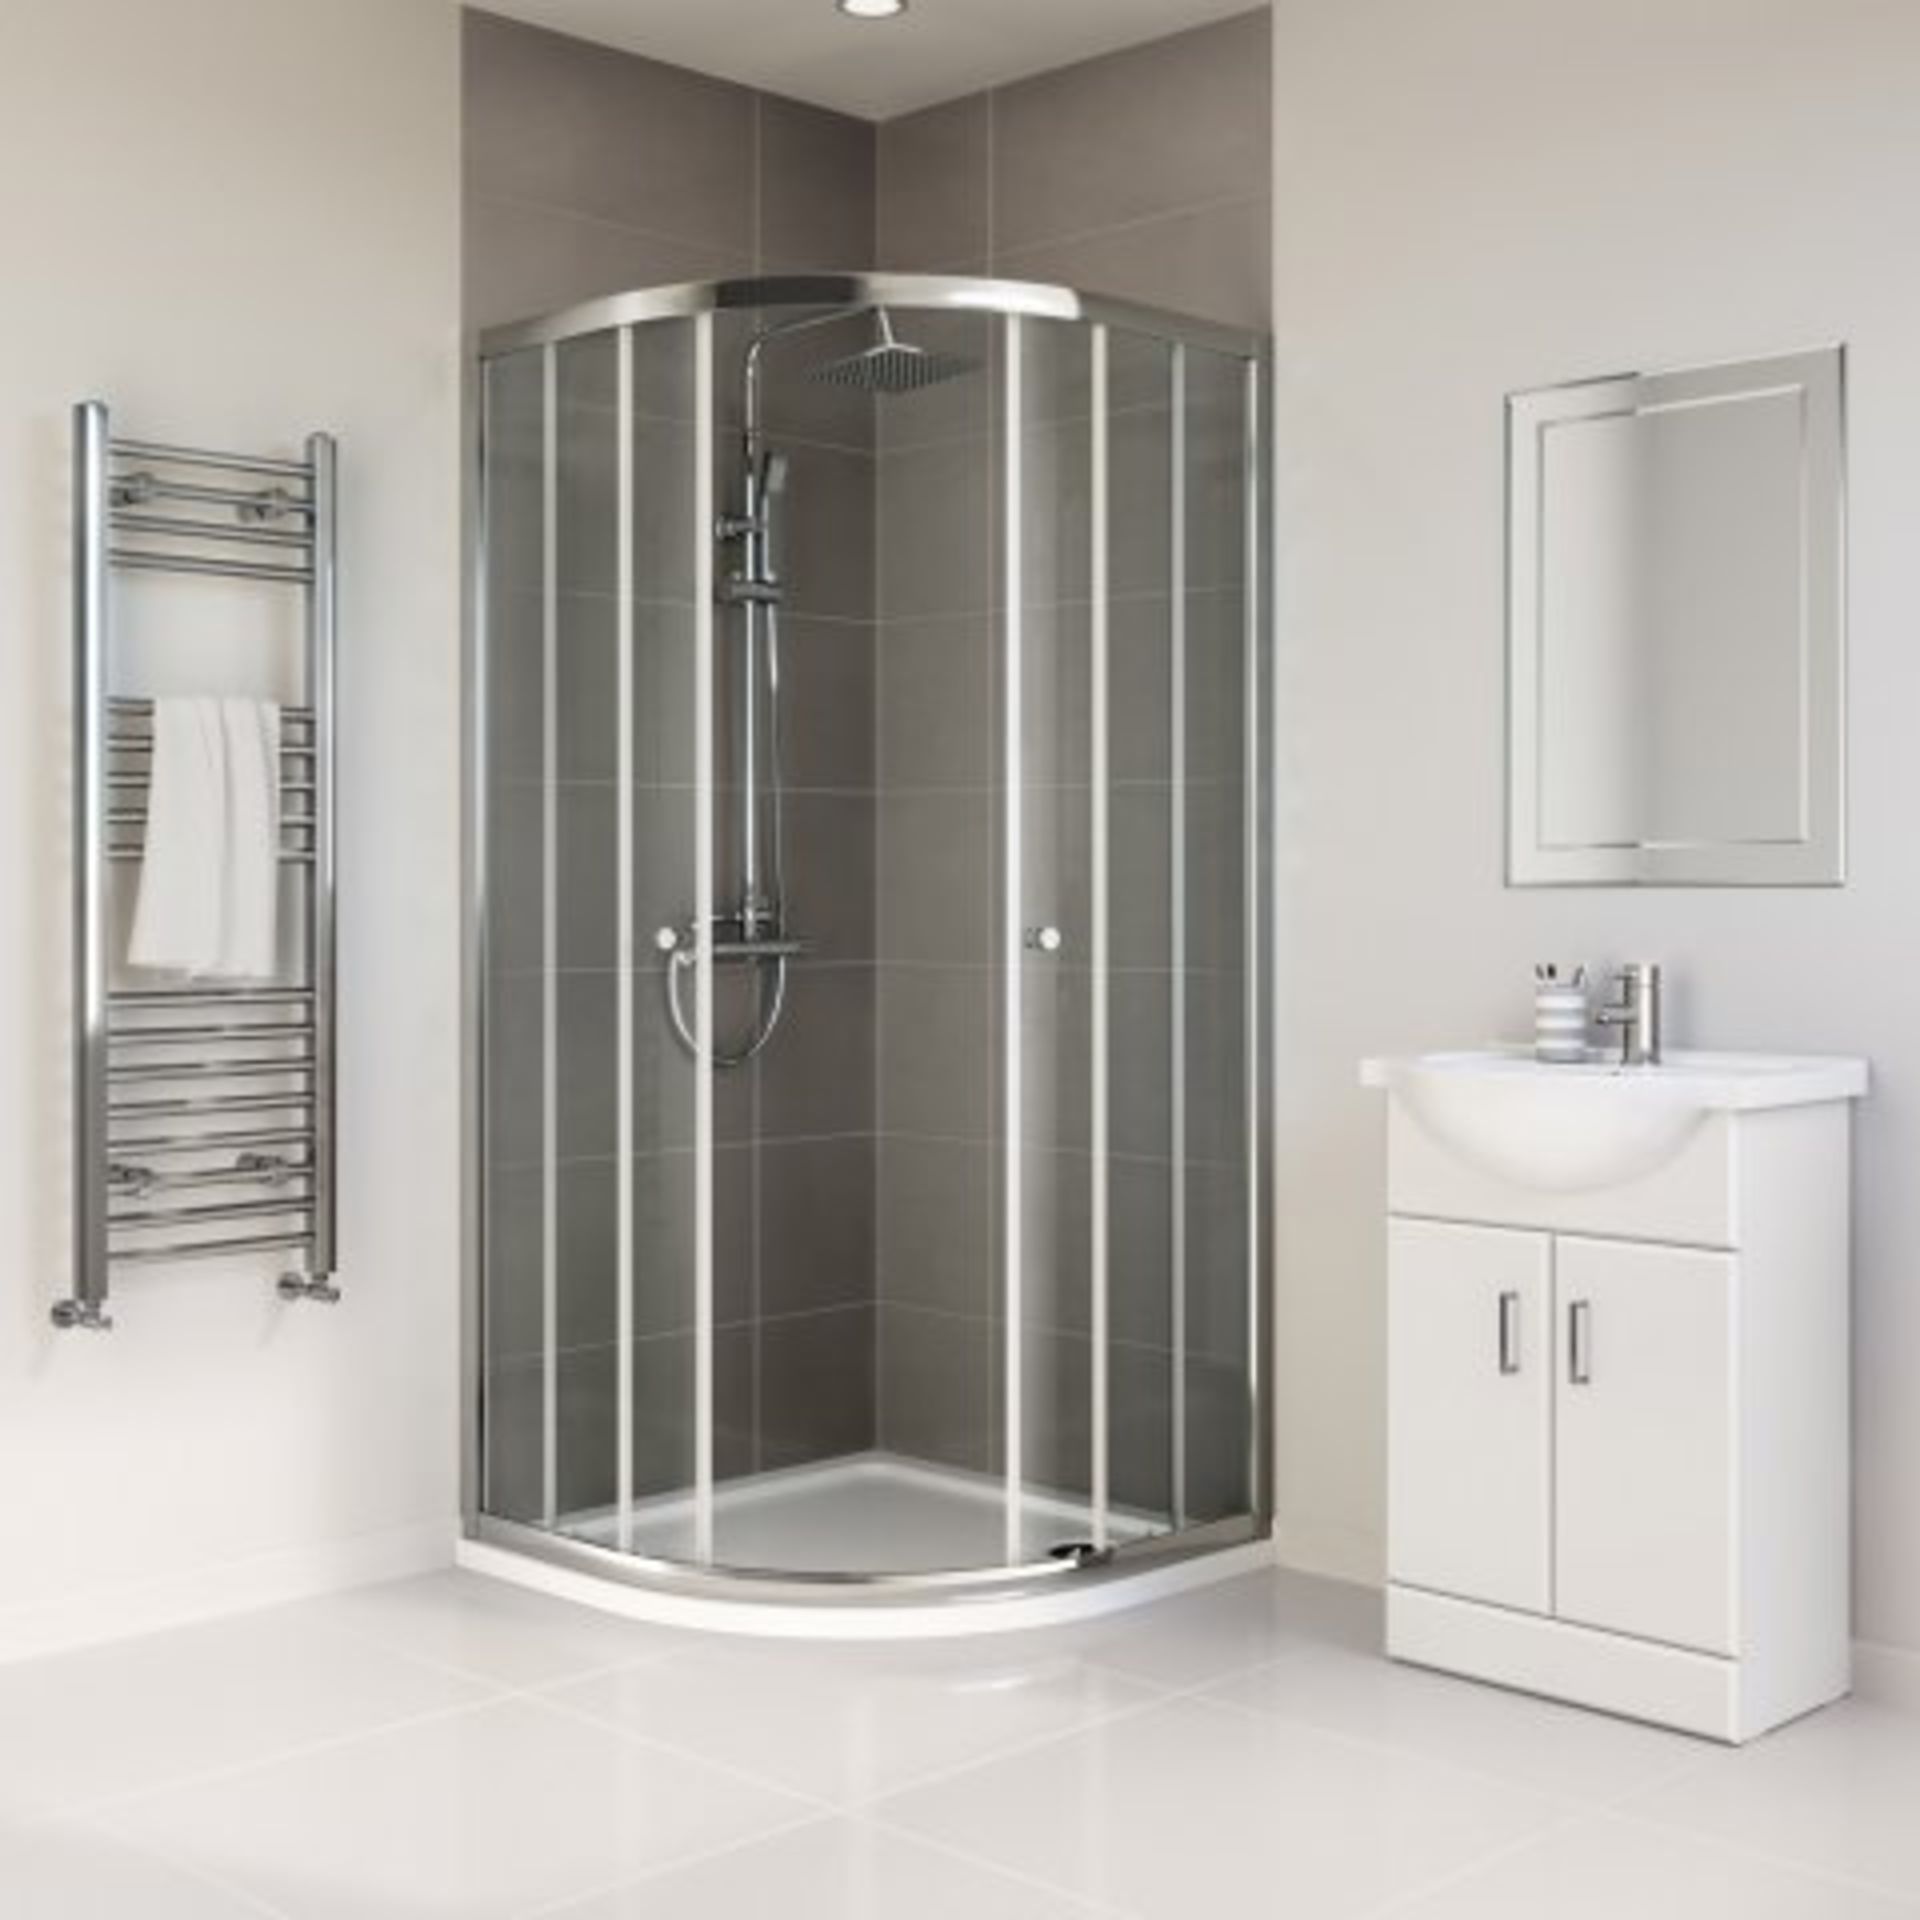 (J177) 800x800mm - Elements Quadrant Shower Enclosure. RRP £199.99. Budget Solution Our entry - Image 4 of 5